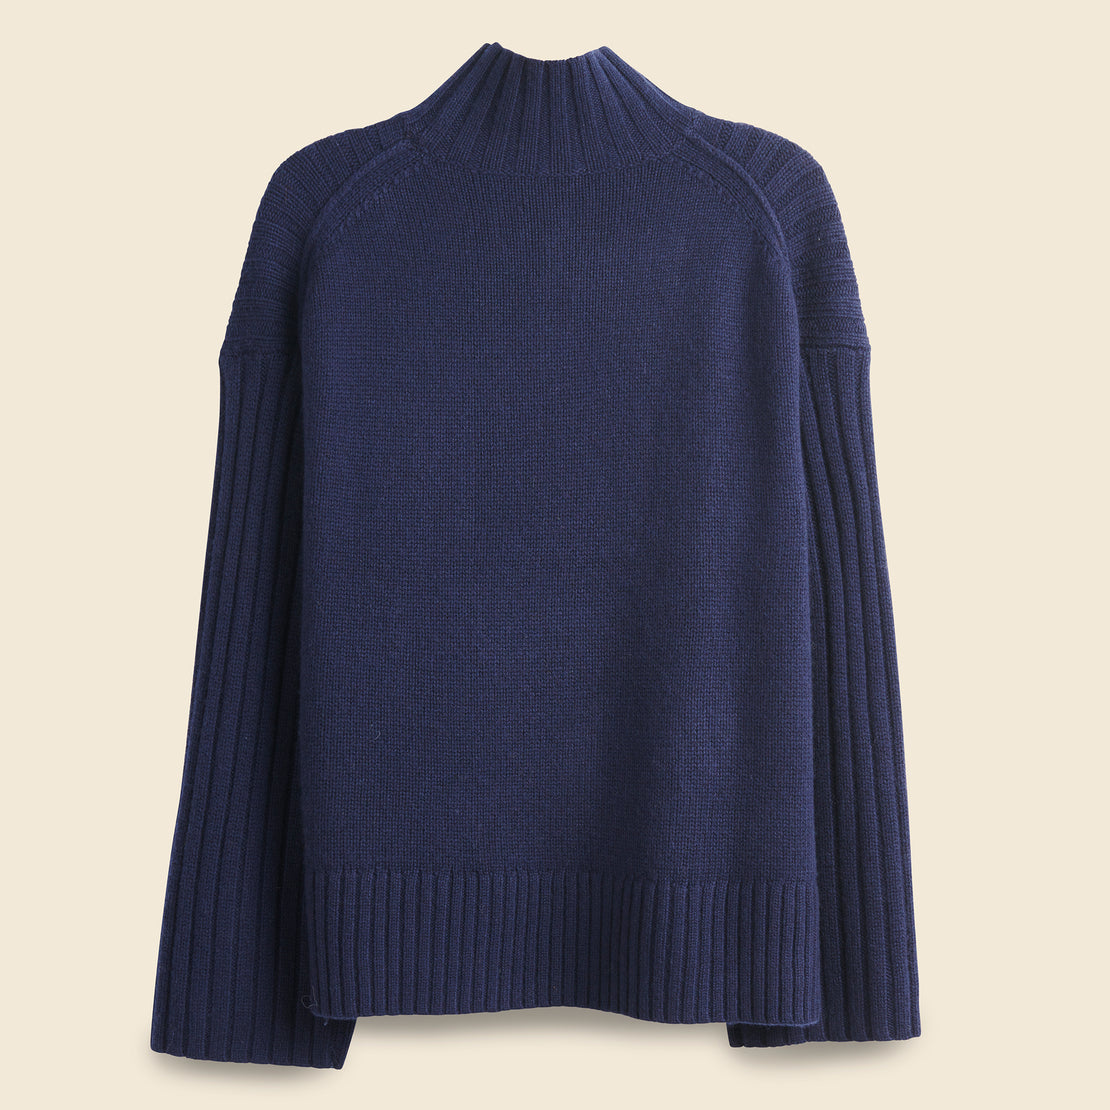 Chaley Rib Mock Neck Sweater - Dark Navy - Alex Mill - STAG Provisions - W - Tops - Sweater